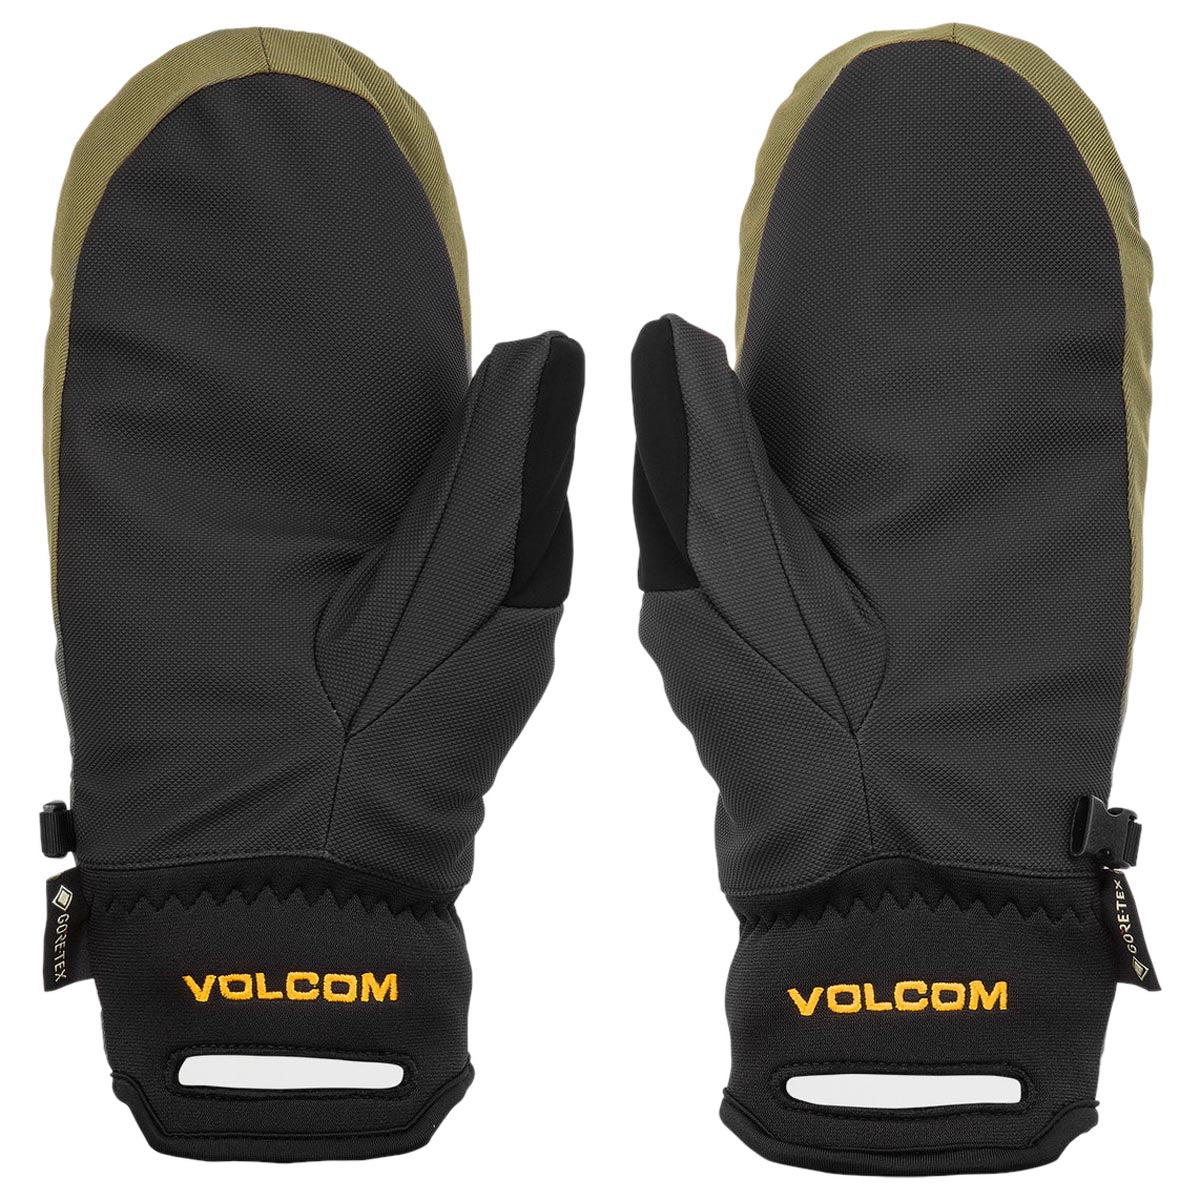 Volcom Stay Dry Gore-tex Mitt Snowboard Gloves - Gold image 2